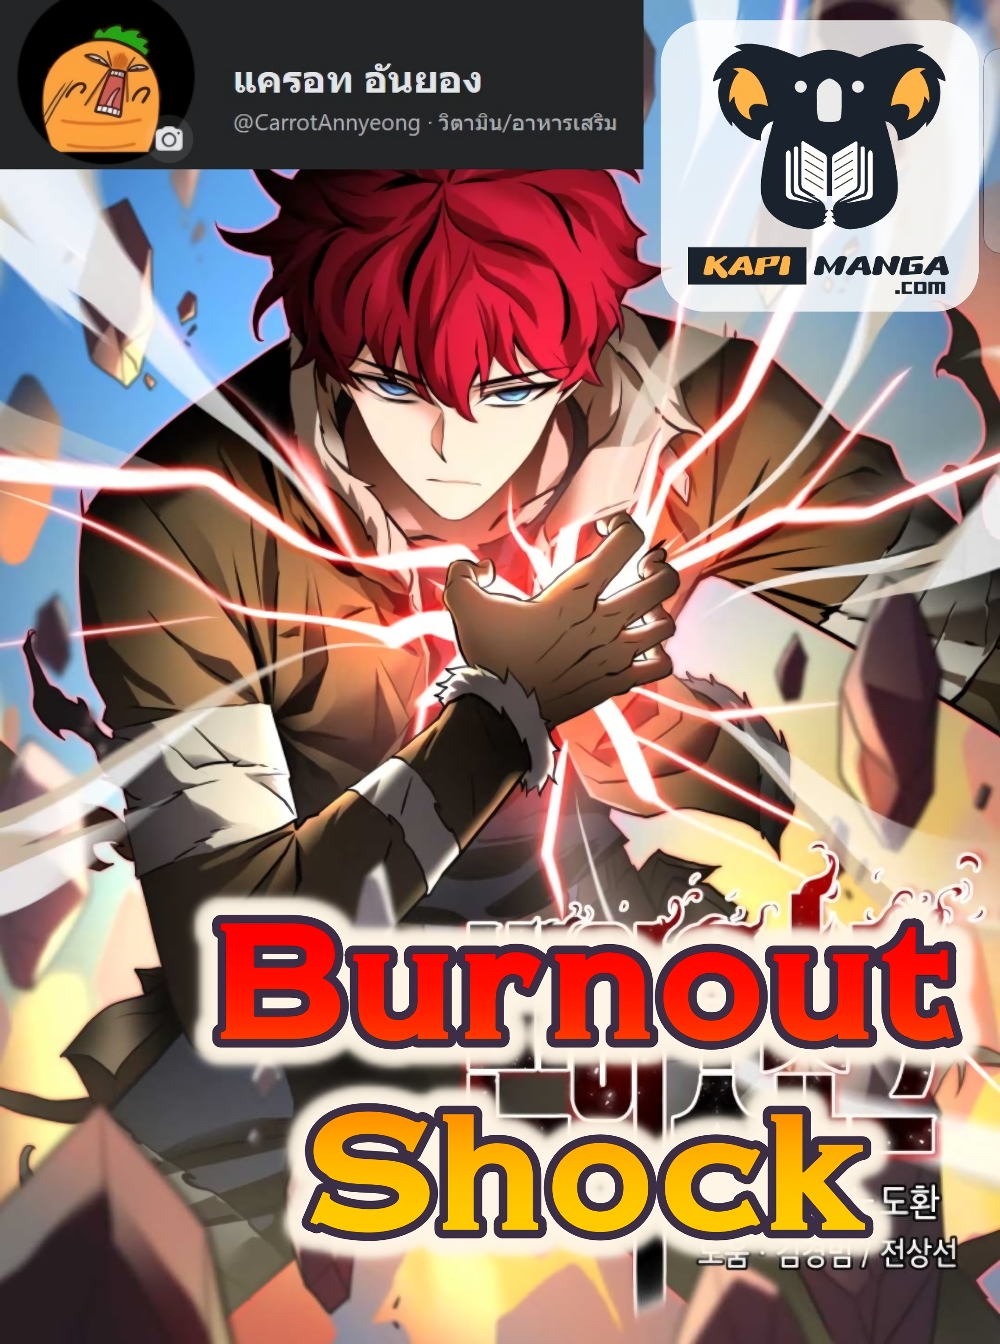 Burnout Shock11 (1)